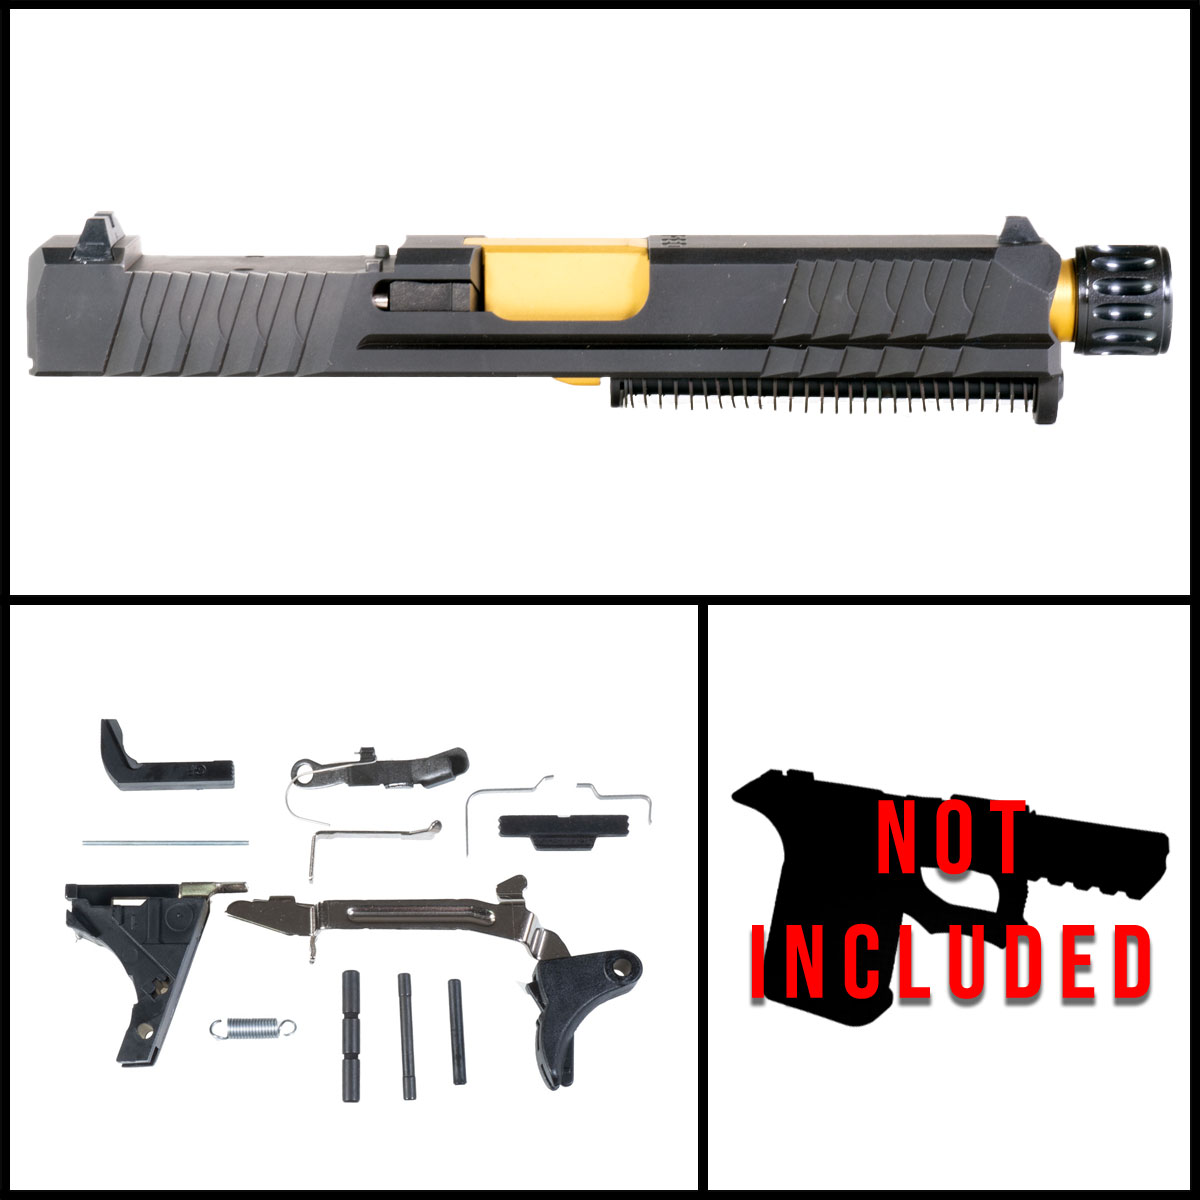 OTD 'Esplosione' 9mm Full Pistol Build Kit (Everything Minus Frame) - Glock 19 Gen 1-3 Compatible